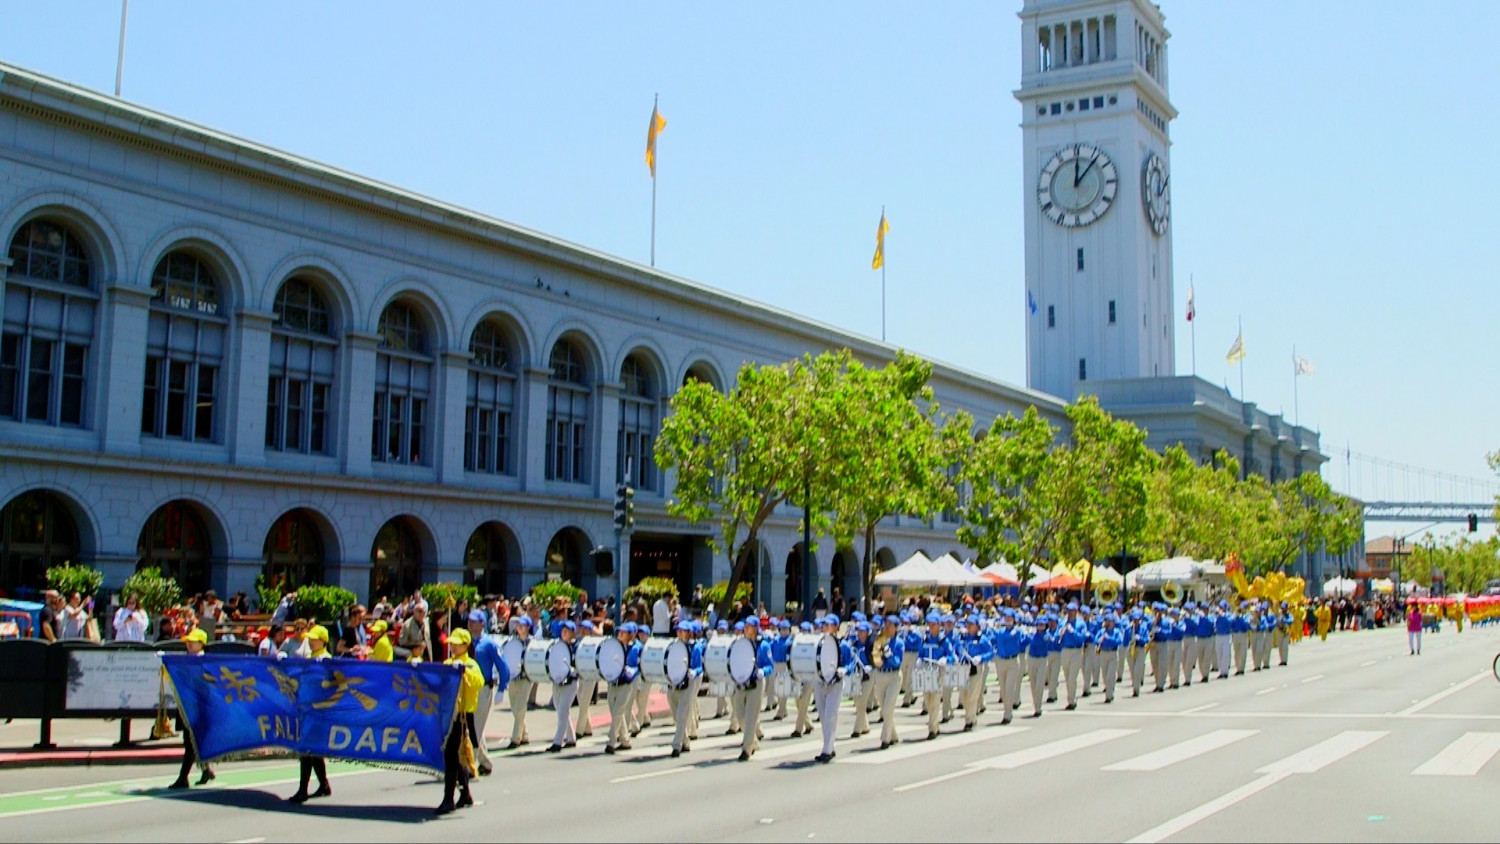 San Francisco Celebrates 27th Falun Dafa Anniversary With Parade